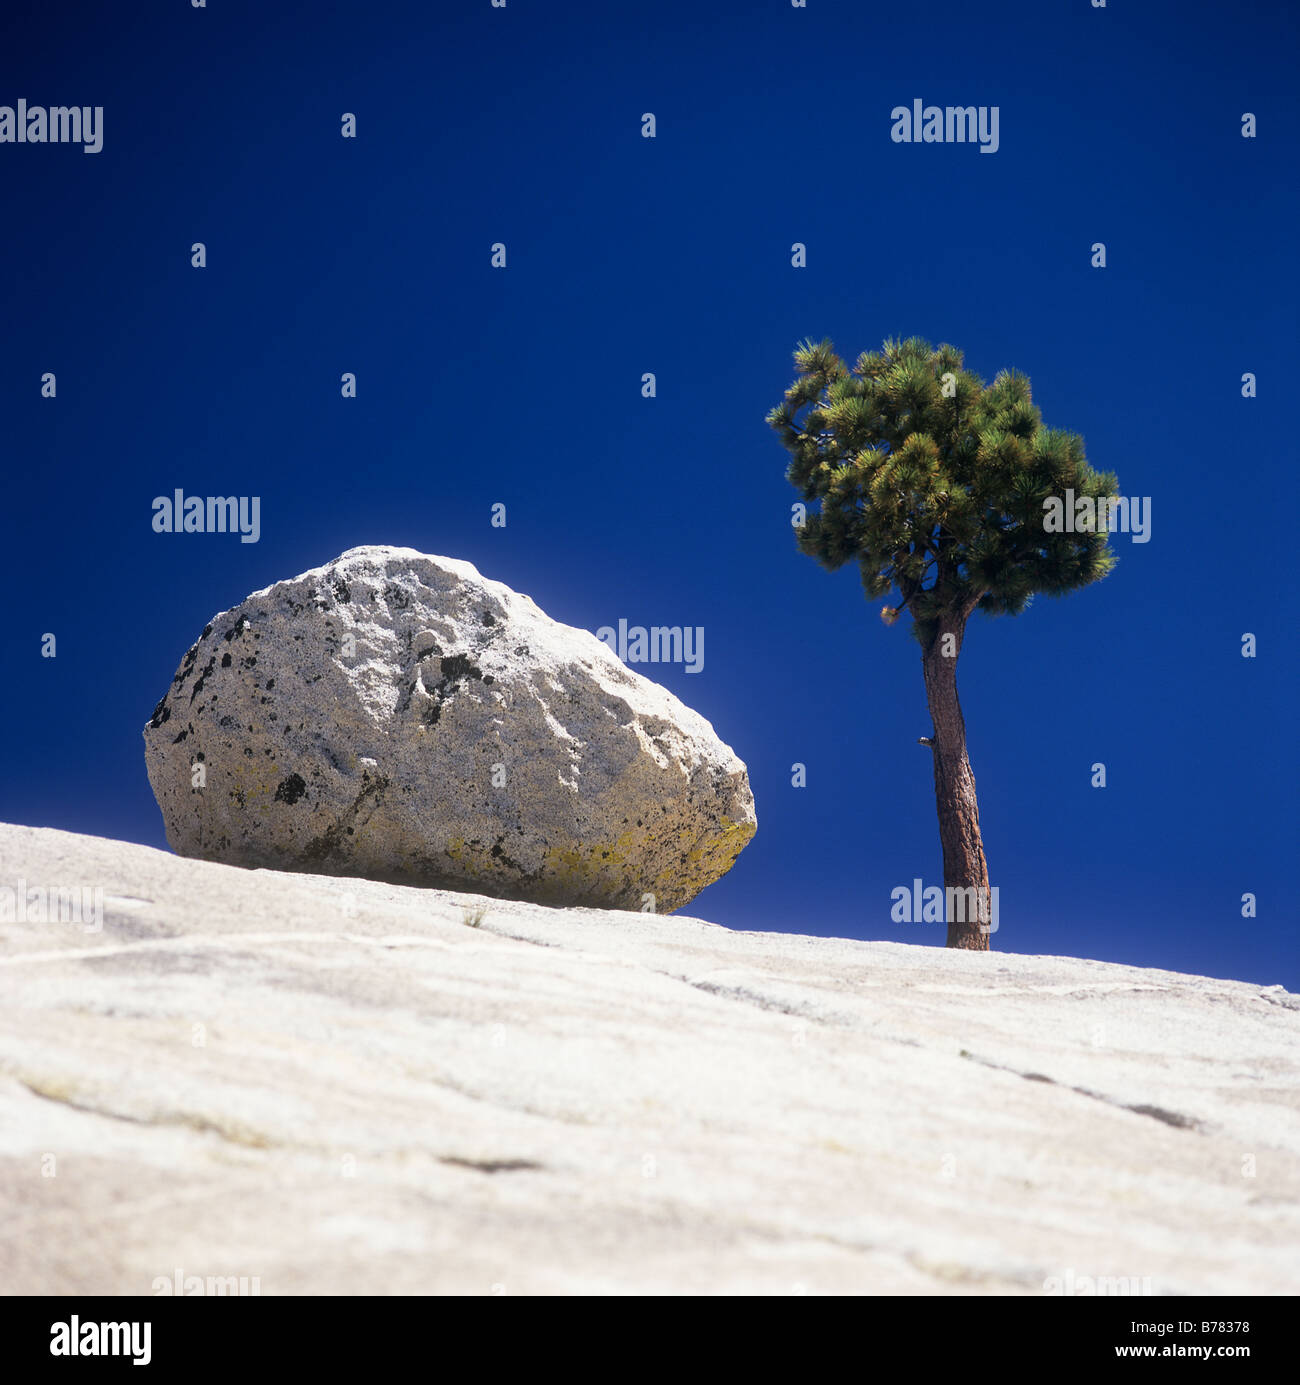 A tree growing in a harsh rocky landscape. Stock Photo